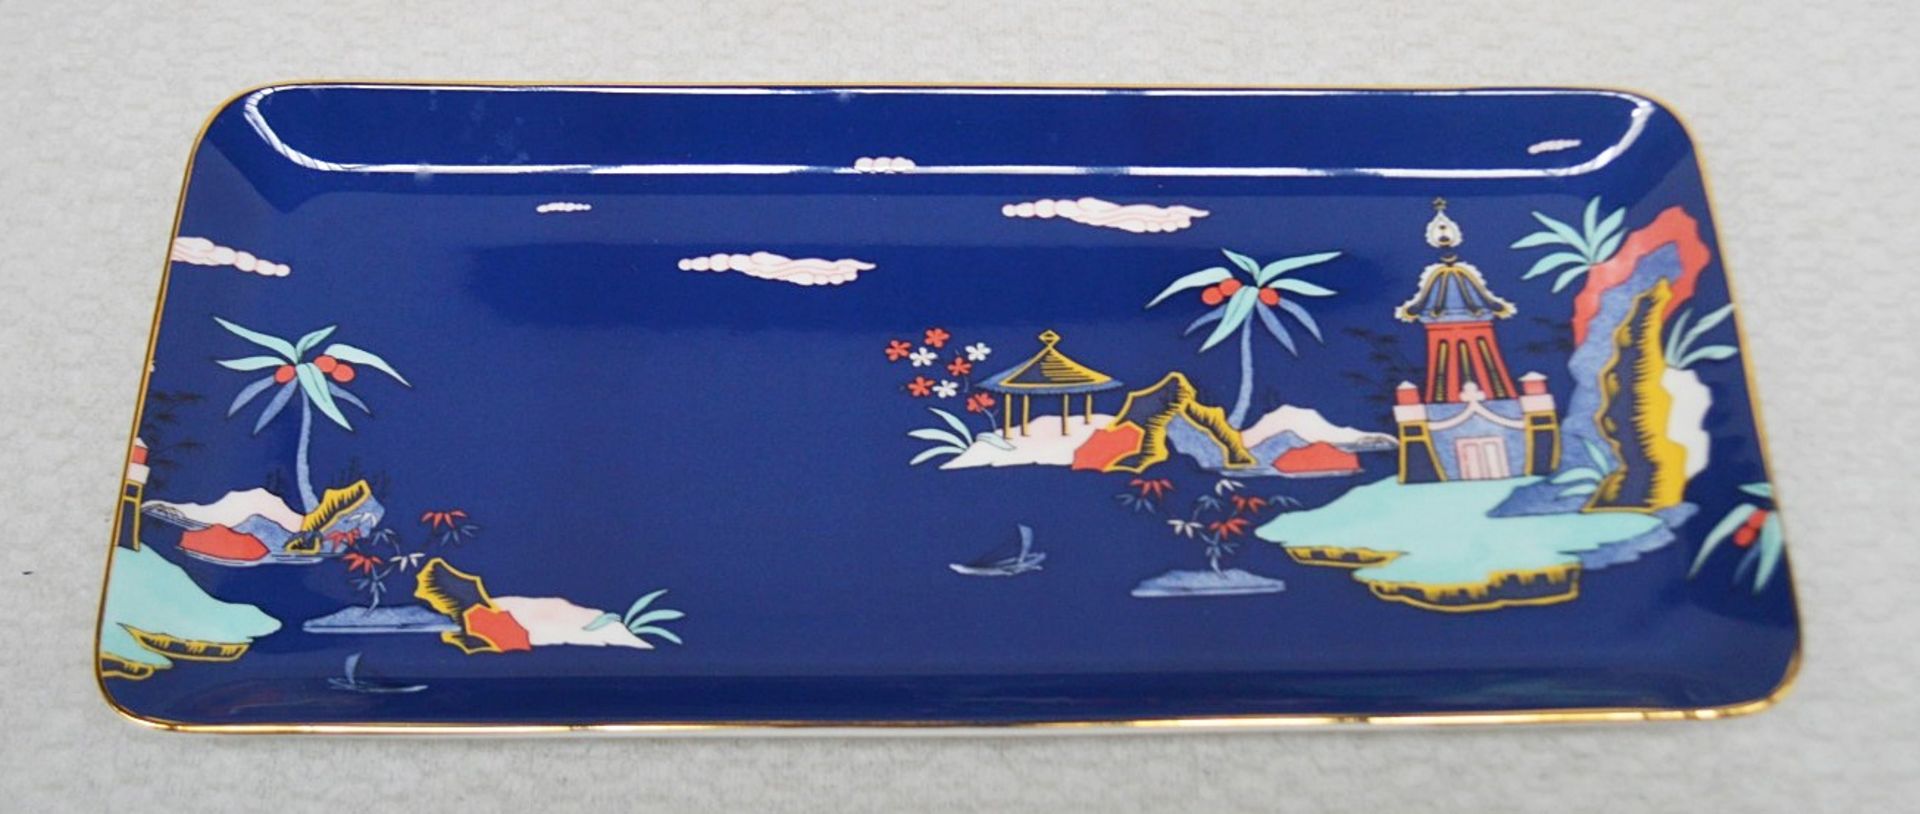 1 x WEDGWOOD 'Wonderlust' Blue Pagoda Sandwich Tray In It's Original Box - Original RRP £85.00